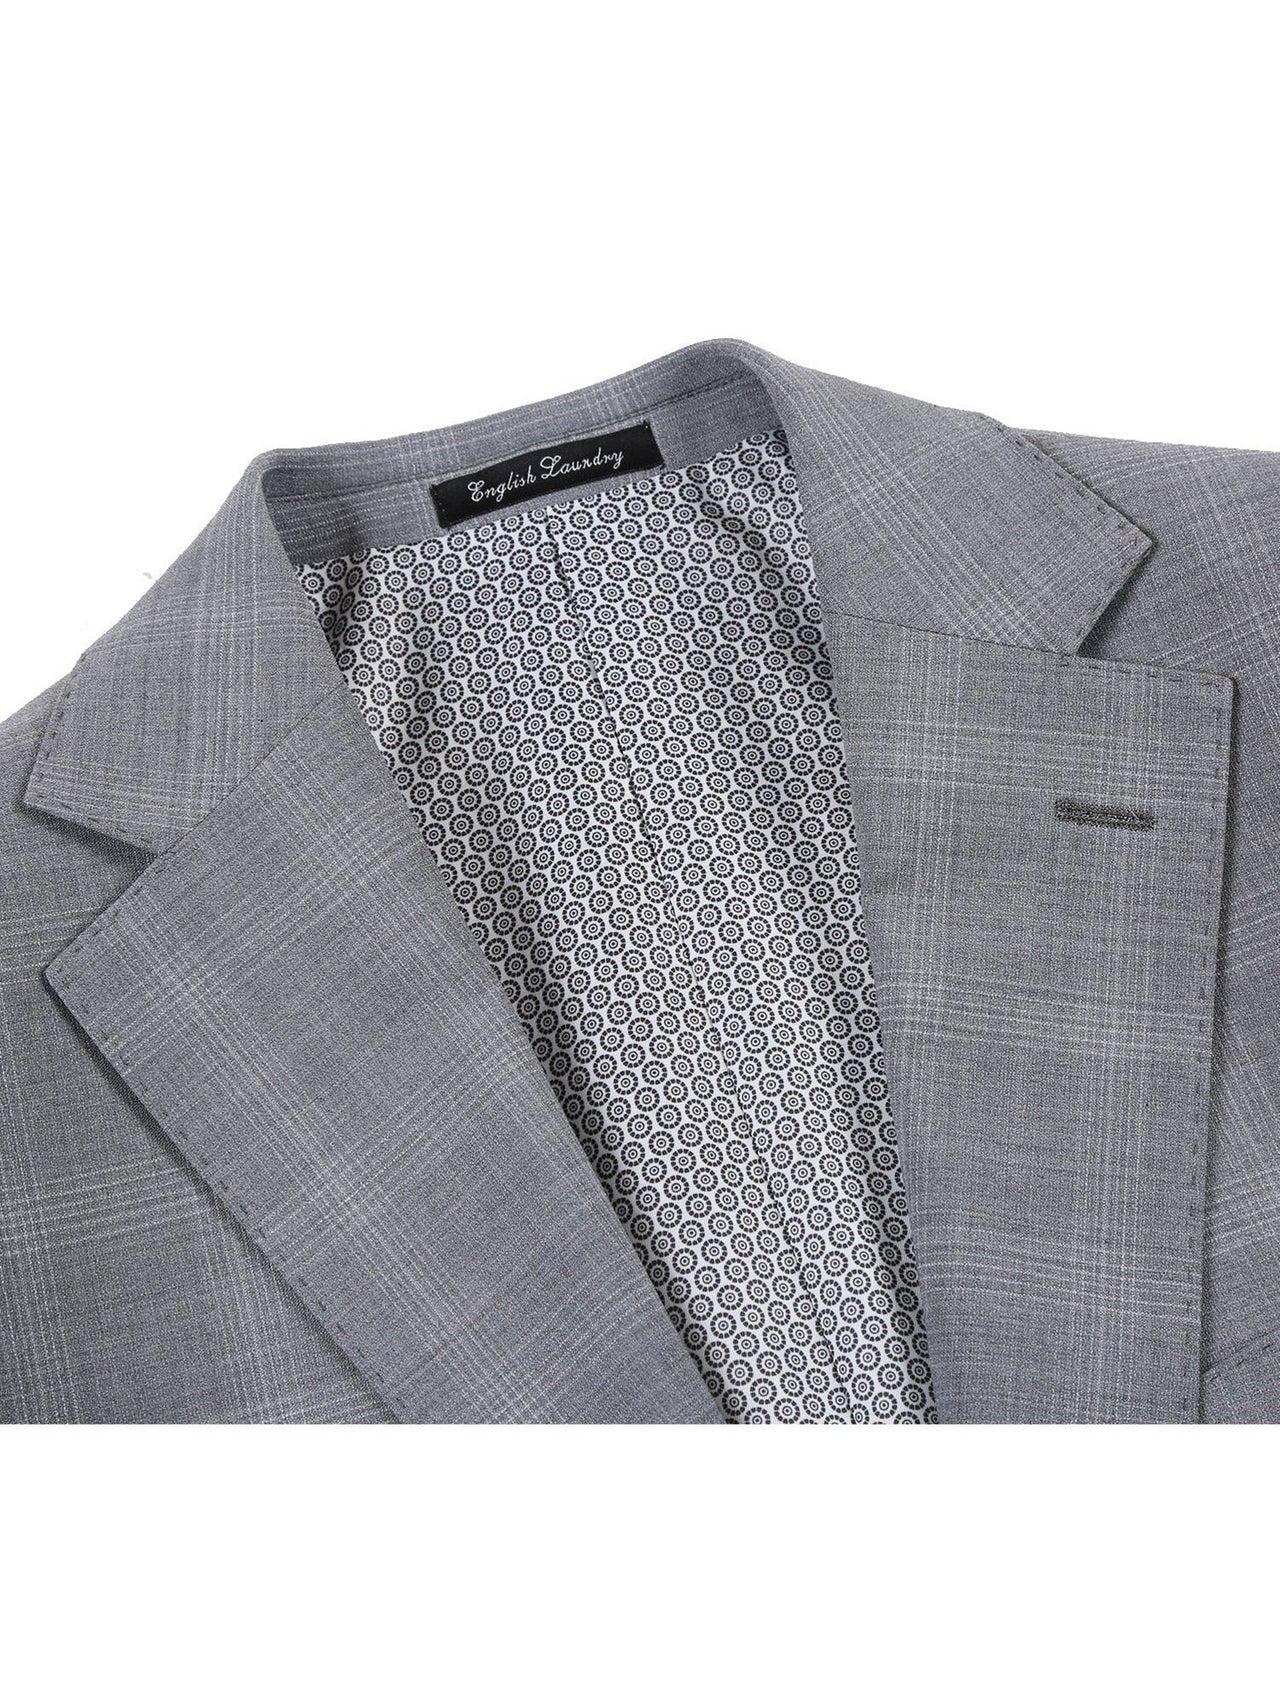 English Laundry Slim Fit Light Gray Window Pane Check Wool Suit